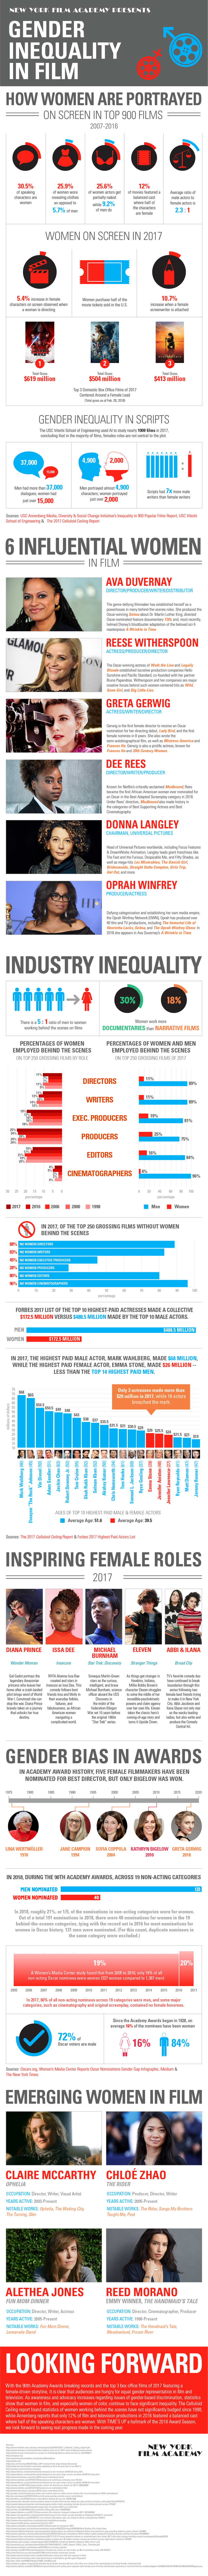 NYFA infographic on women in film 2018